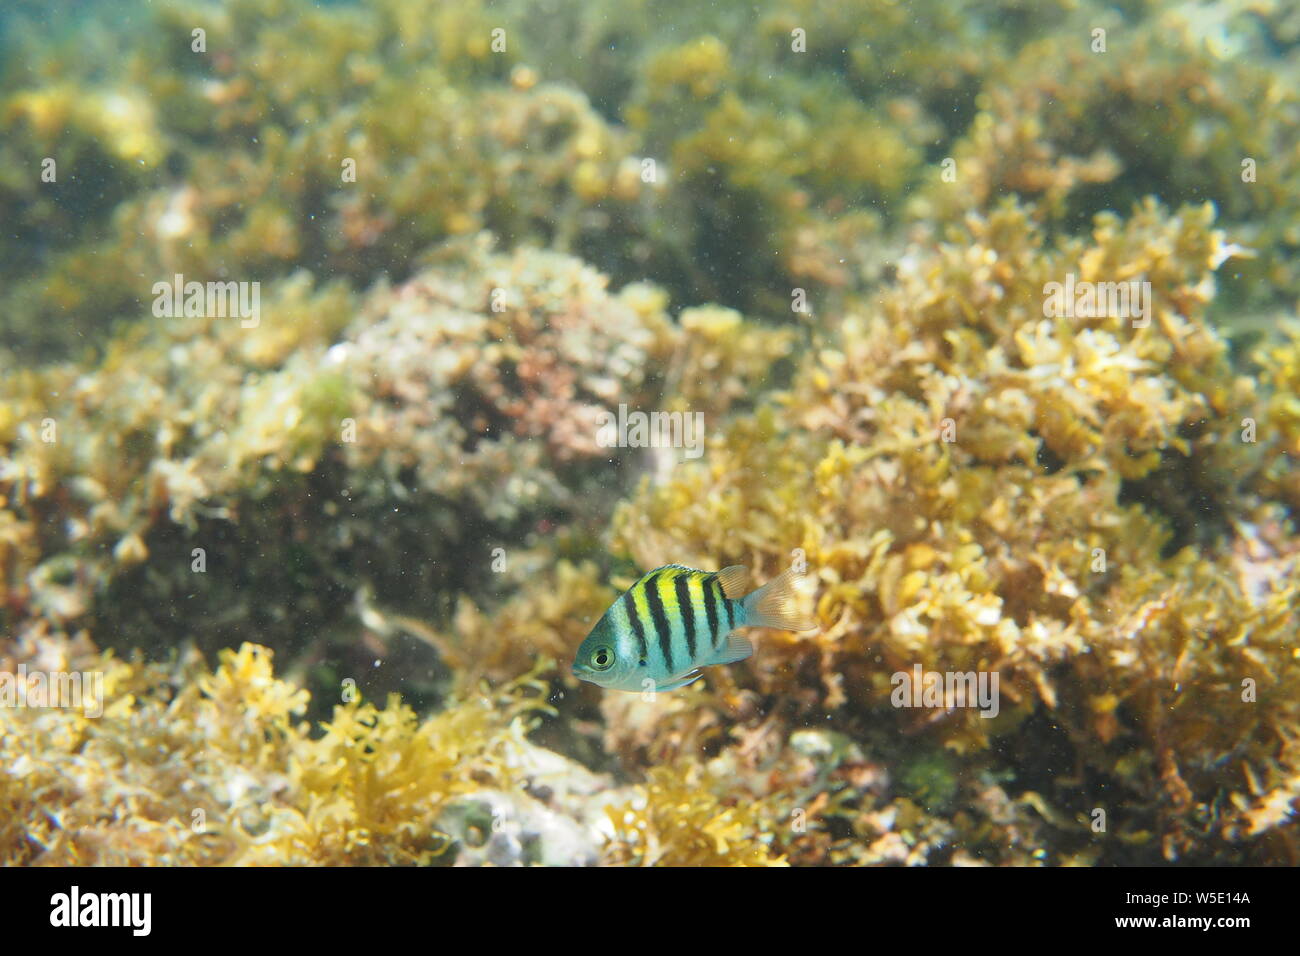 Single Sergeant Major damsel fish (Abudefduf saxatilis) nibbling on sea weed and plants, Shoal Bay East, Anguilla, BWI. Stock Photo